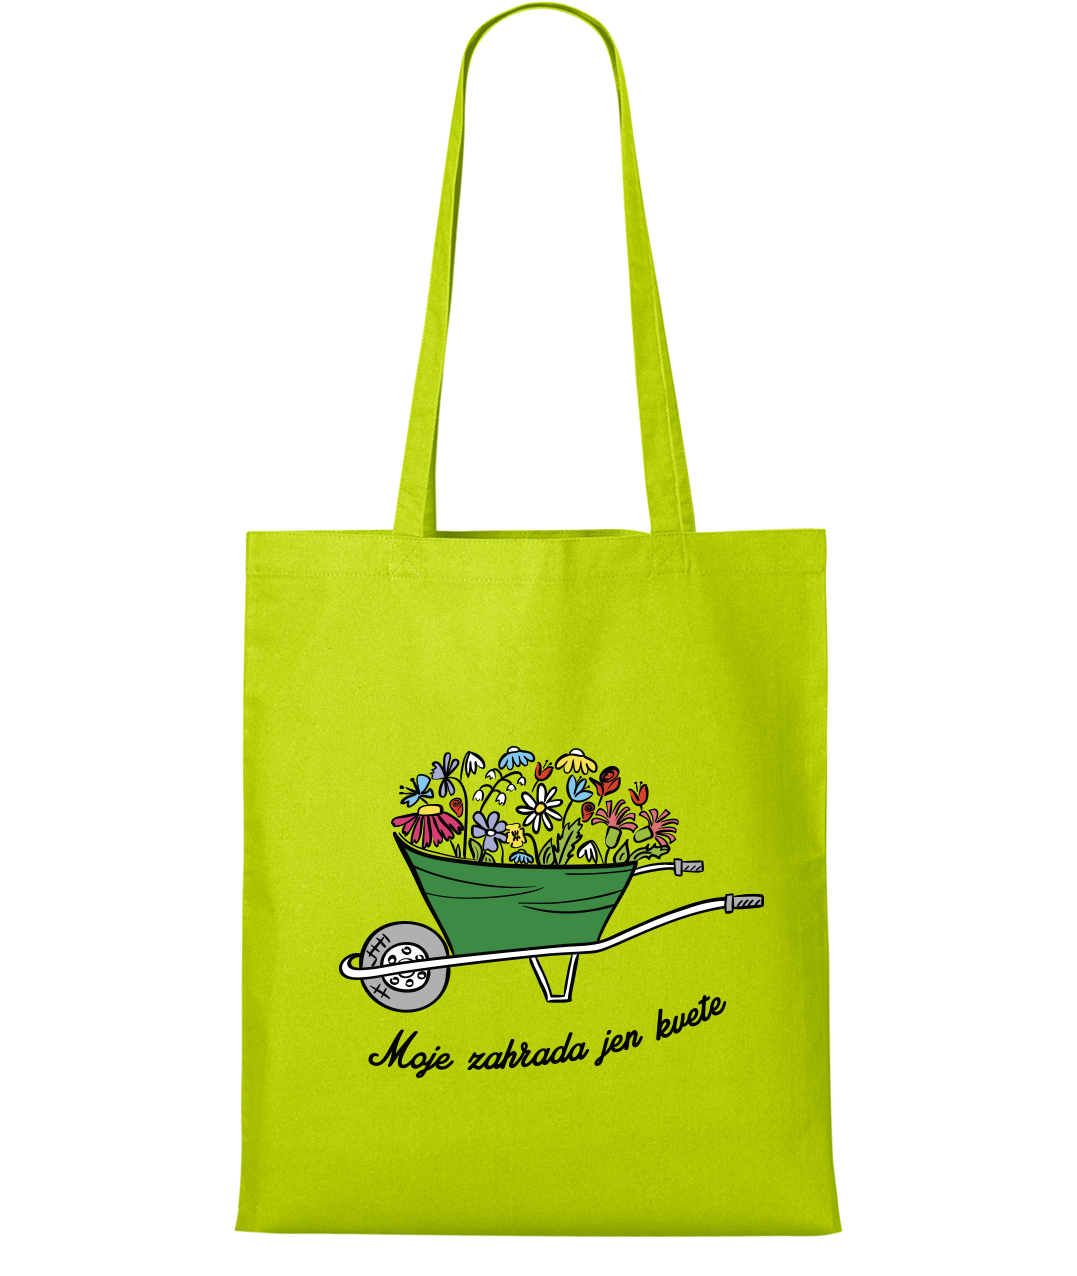 Nákupní taška - Moje zahrada jen kvete Barva: Limetková